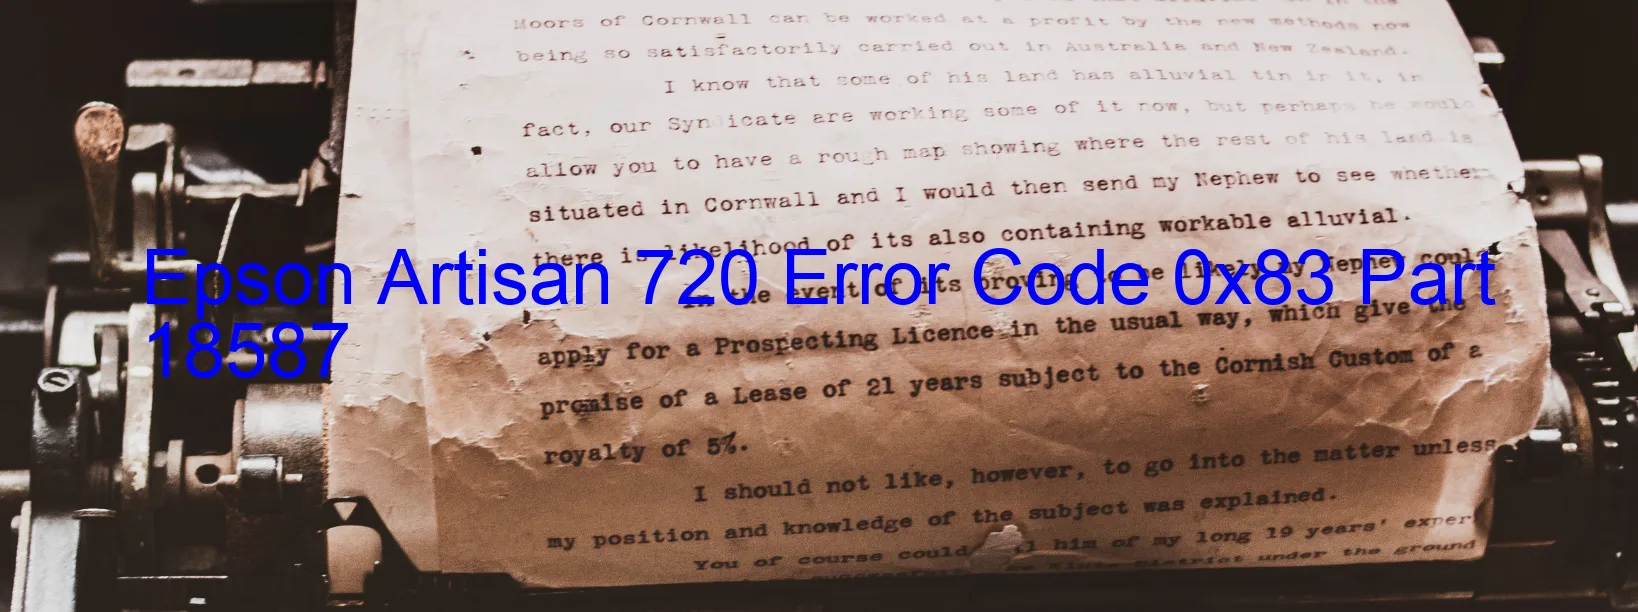 Epson Artisan 720 Error Code 0x83 Part 18587